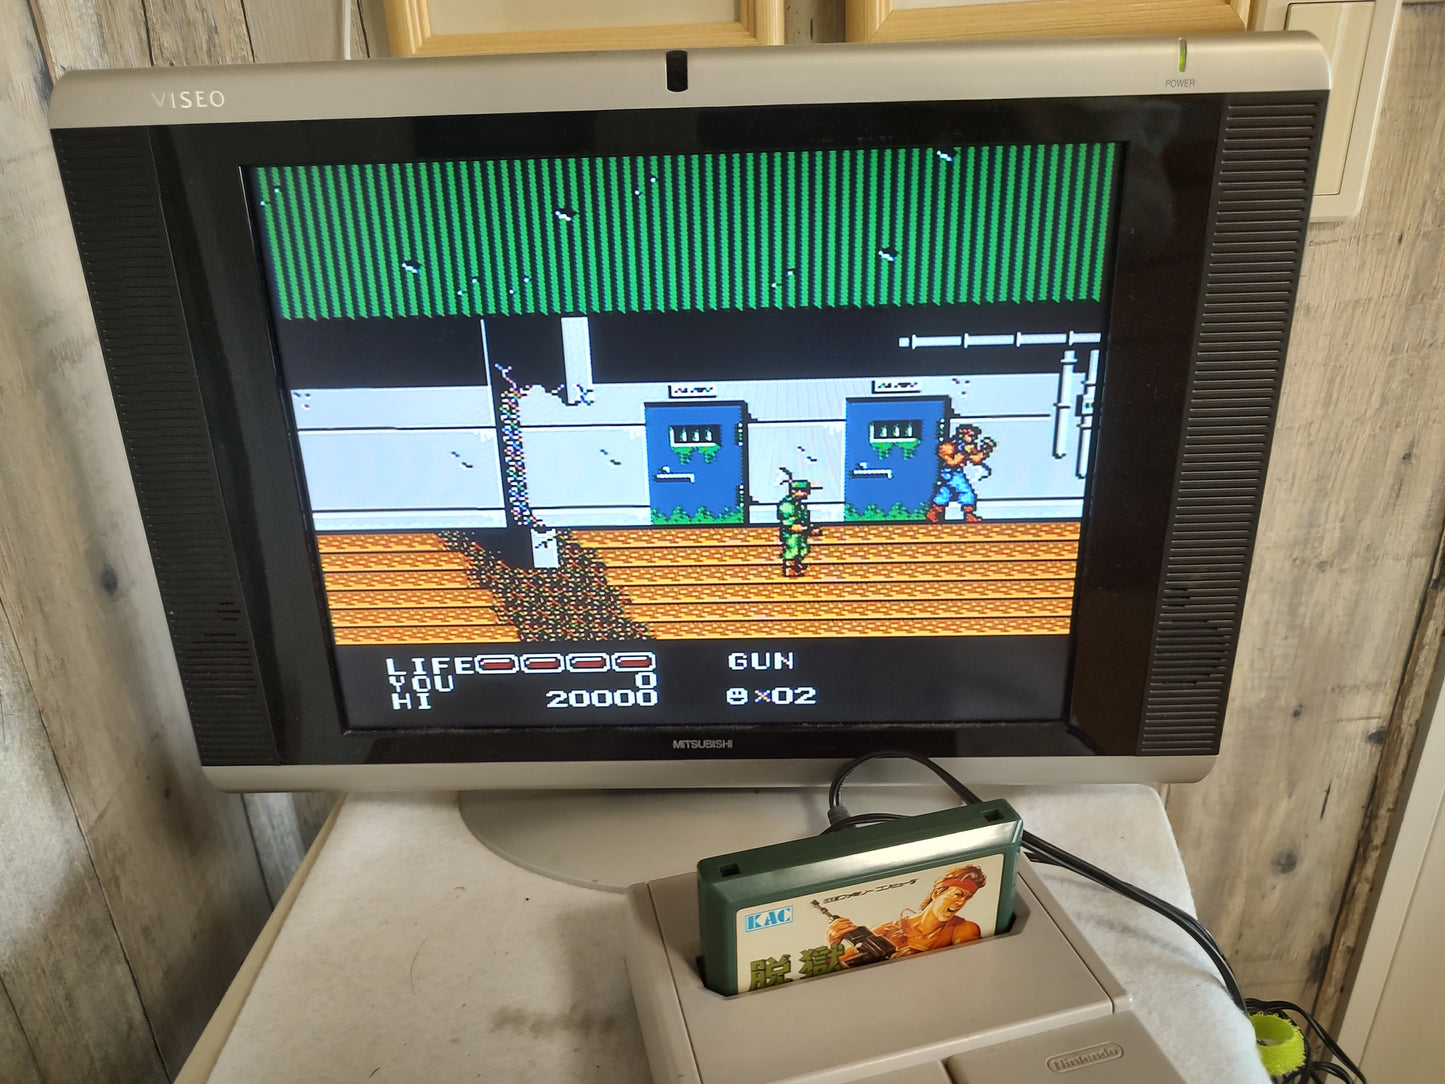 Datsugoku Prisoners of War game cartridge set, Famicom, FC, NES, Working-ef0504-